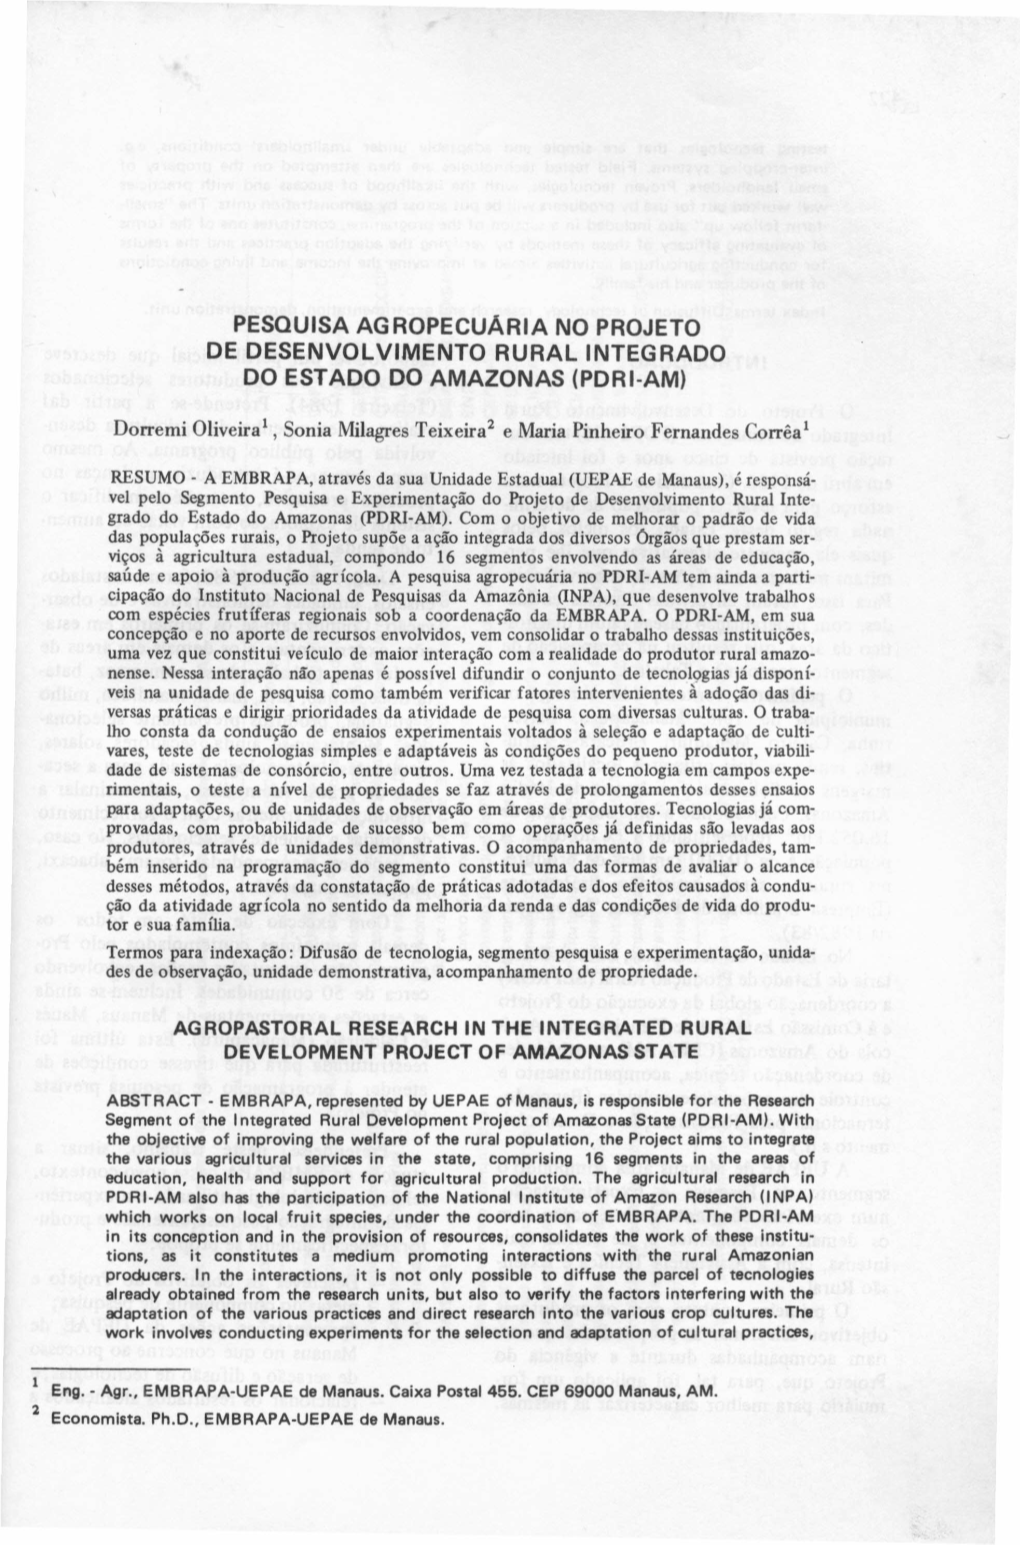 Pesquisa Agropecuaria No Projeto De Desenvolvimento Rural Integrado Do Estado Do Amazonas (Pdri-Am)